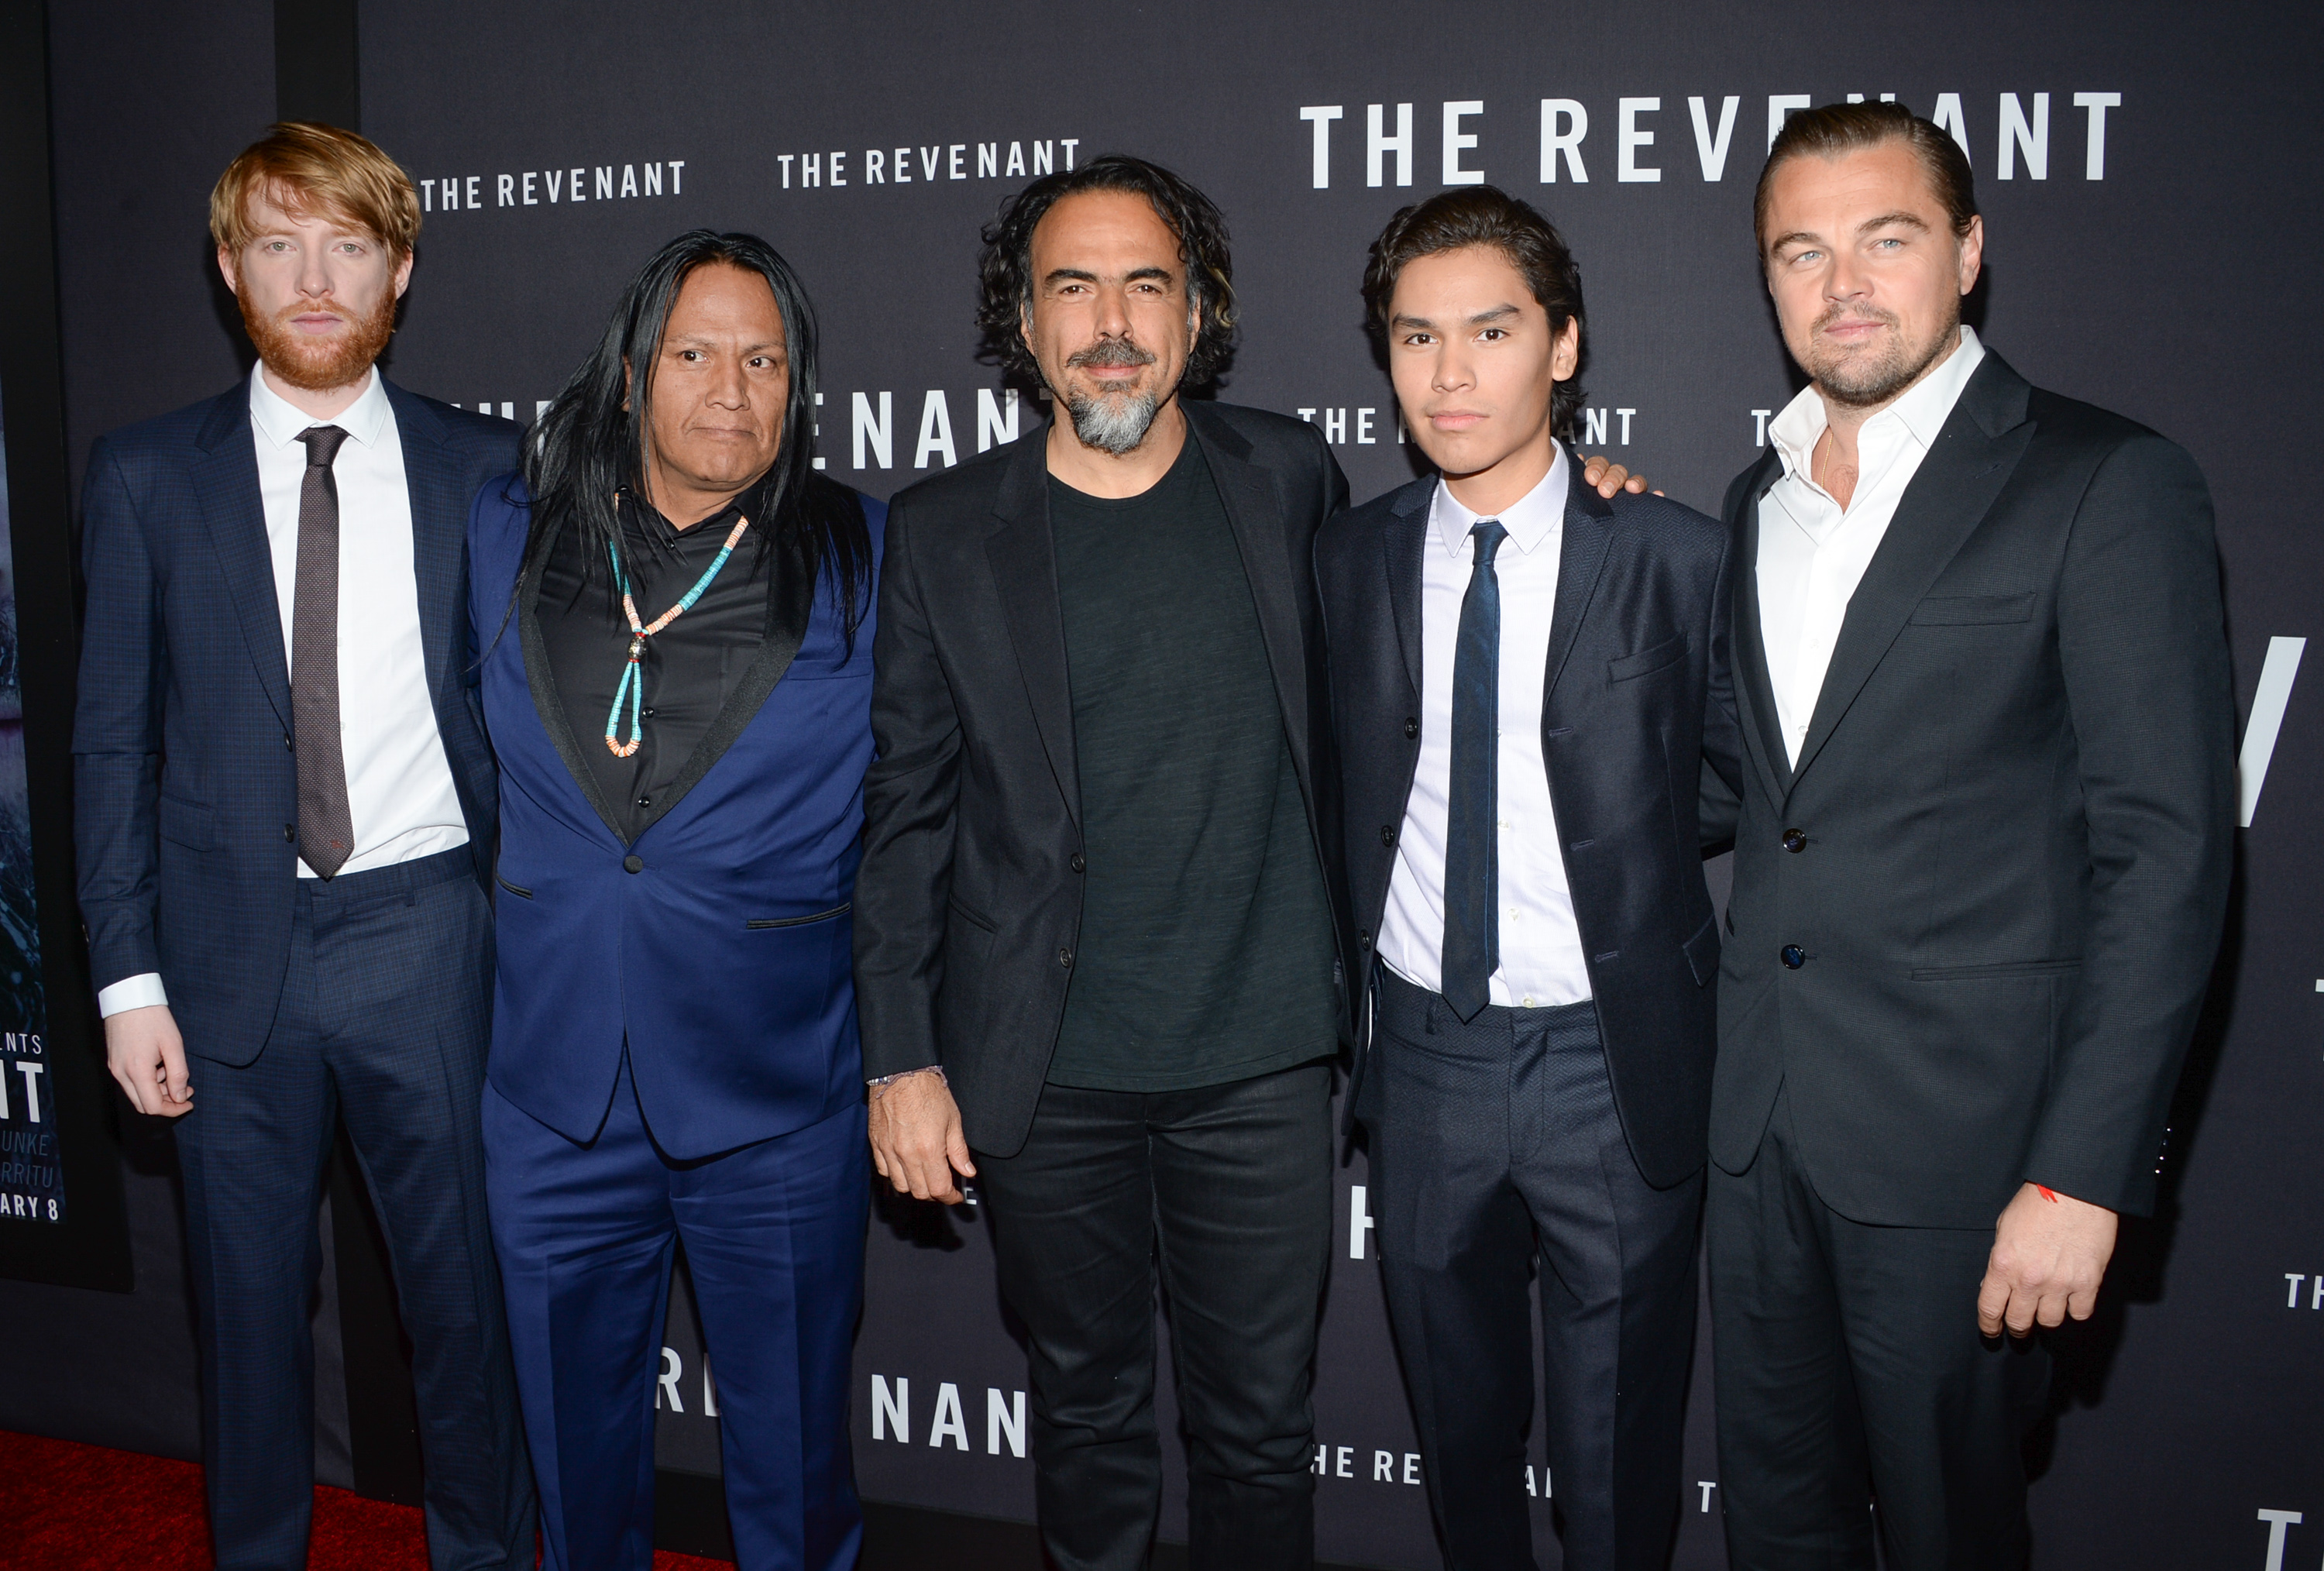 Obtiene "The Revenant", de Iñárritu, 8 nominaciones BAFTA